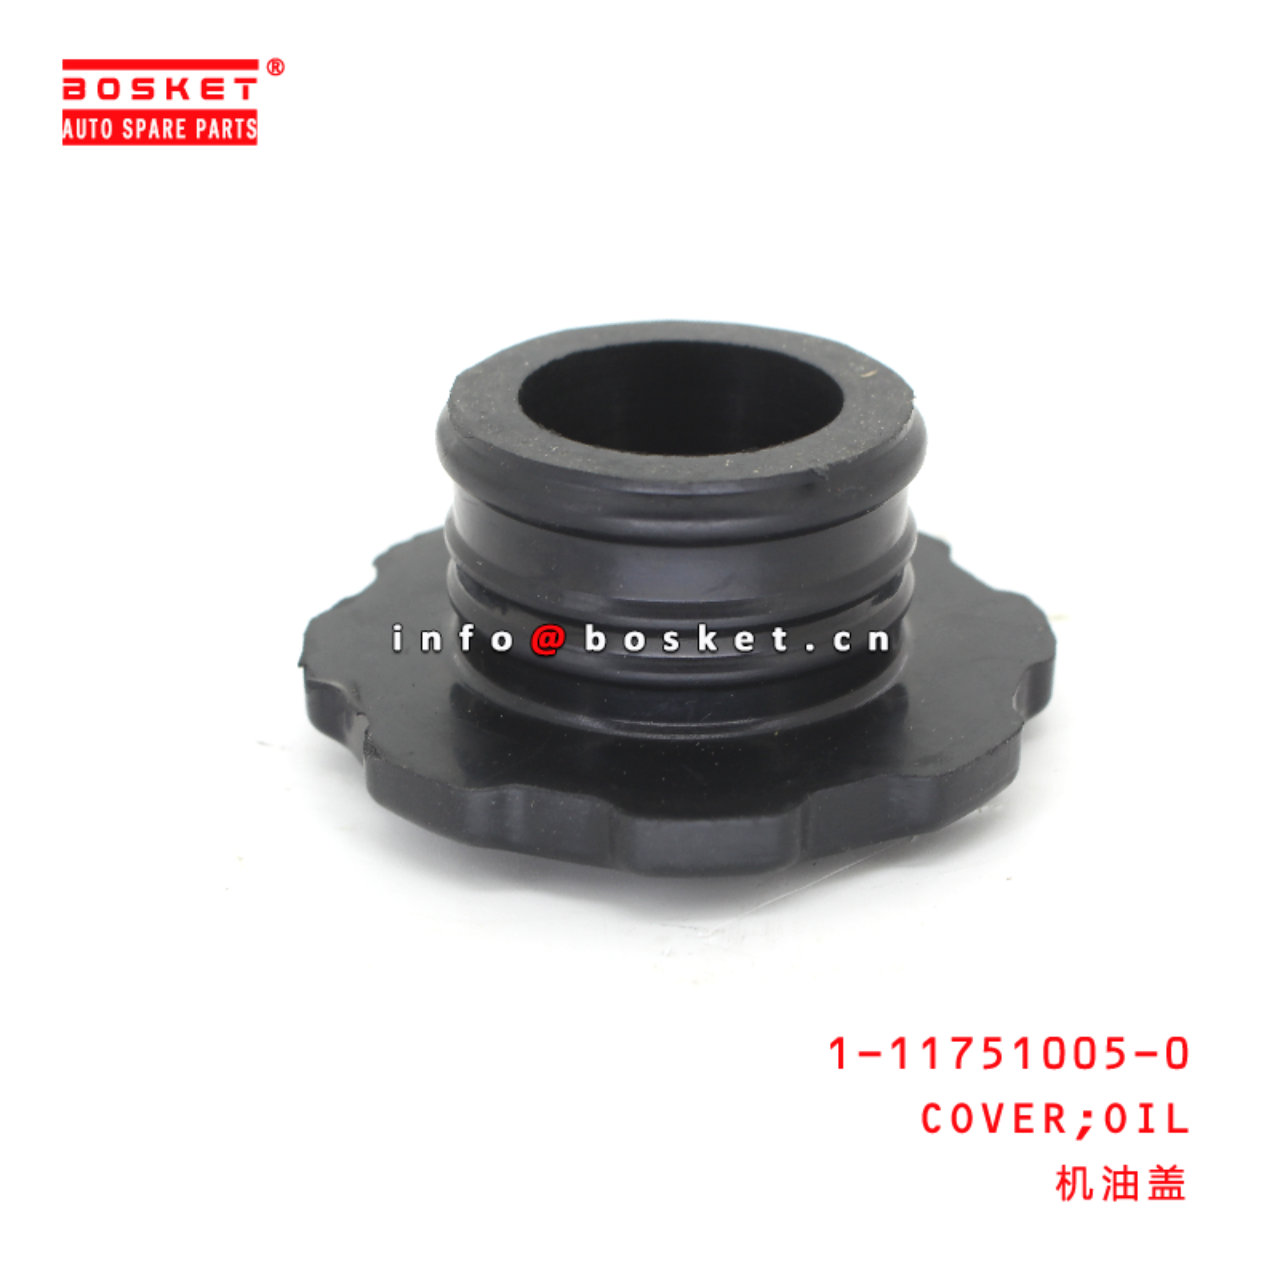 1-11751005-0 Oil Cover suitable for ISUZU 6BD1 6BG1 1117510050